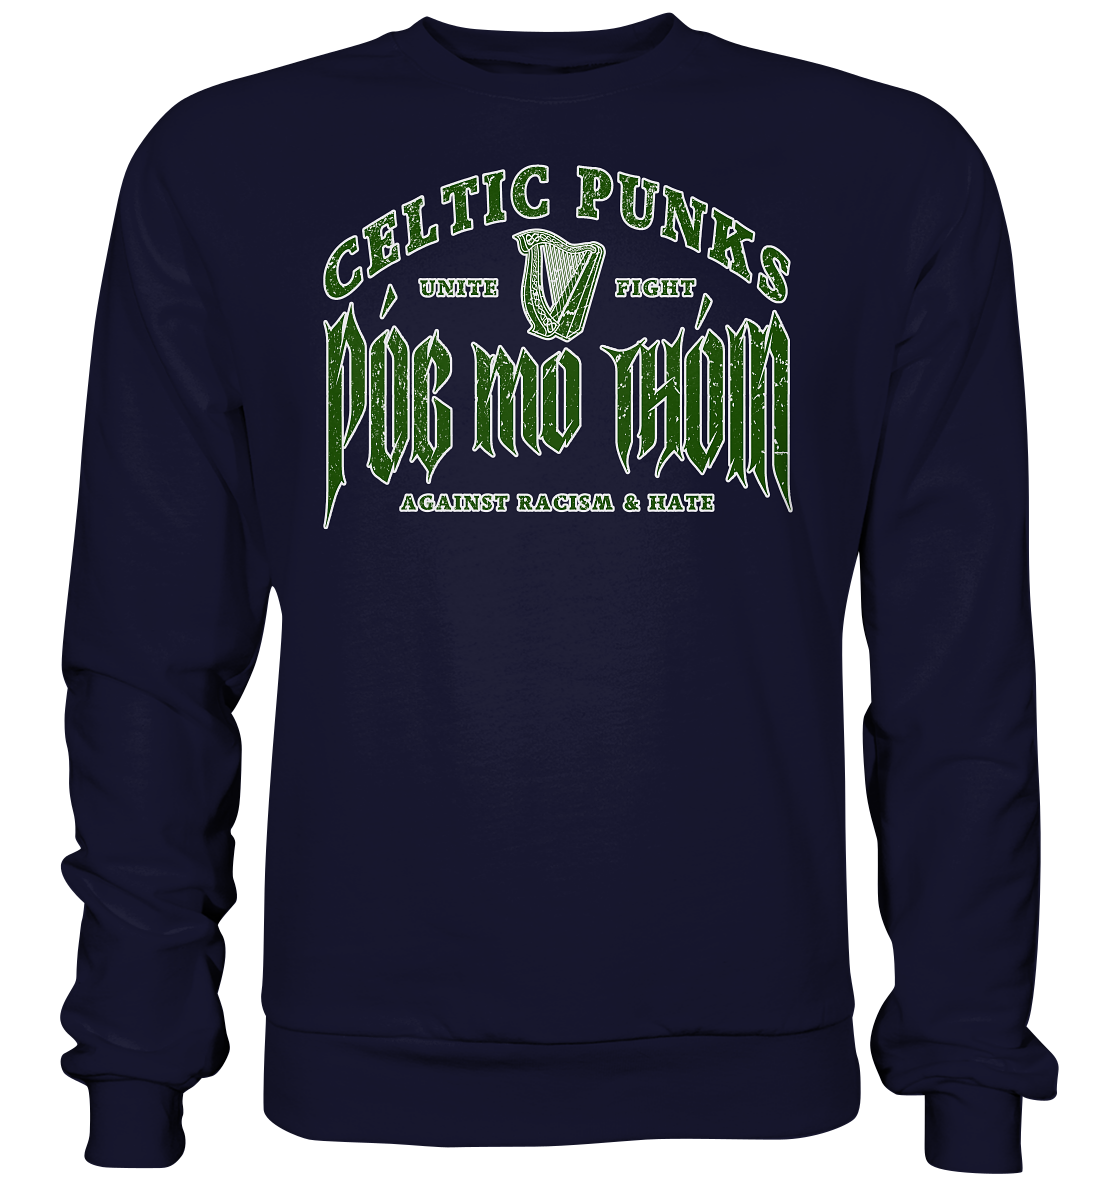 Póg Mo Thóin Streetwear "Celtic Punks Against Racism & Hate / Unite & Fight" - Basic Sweatshirt